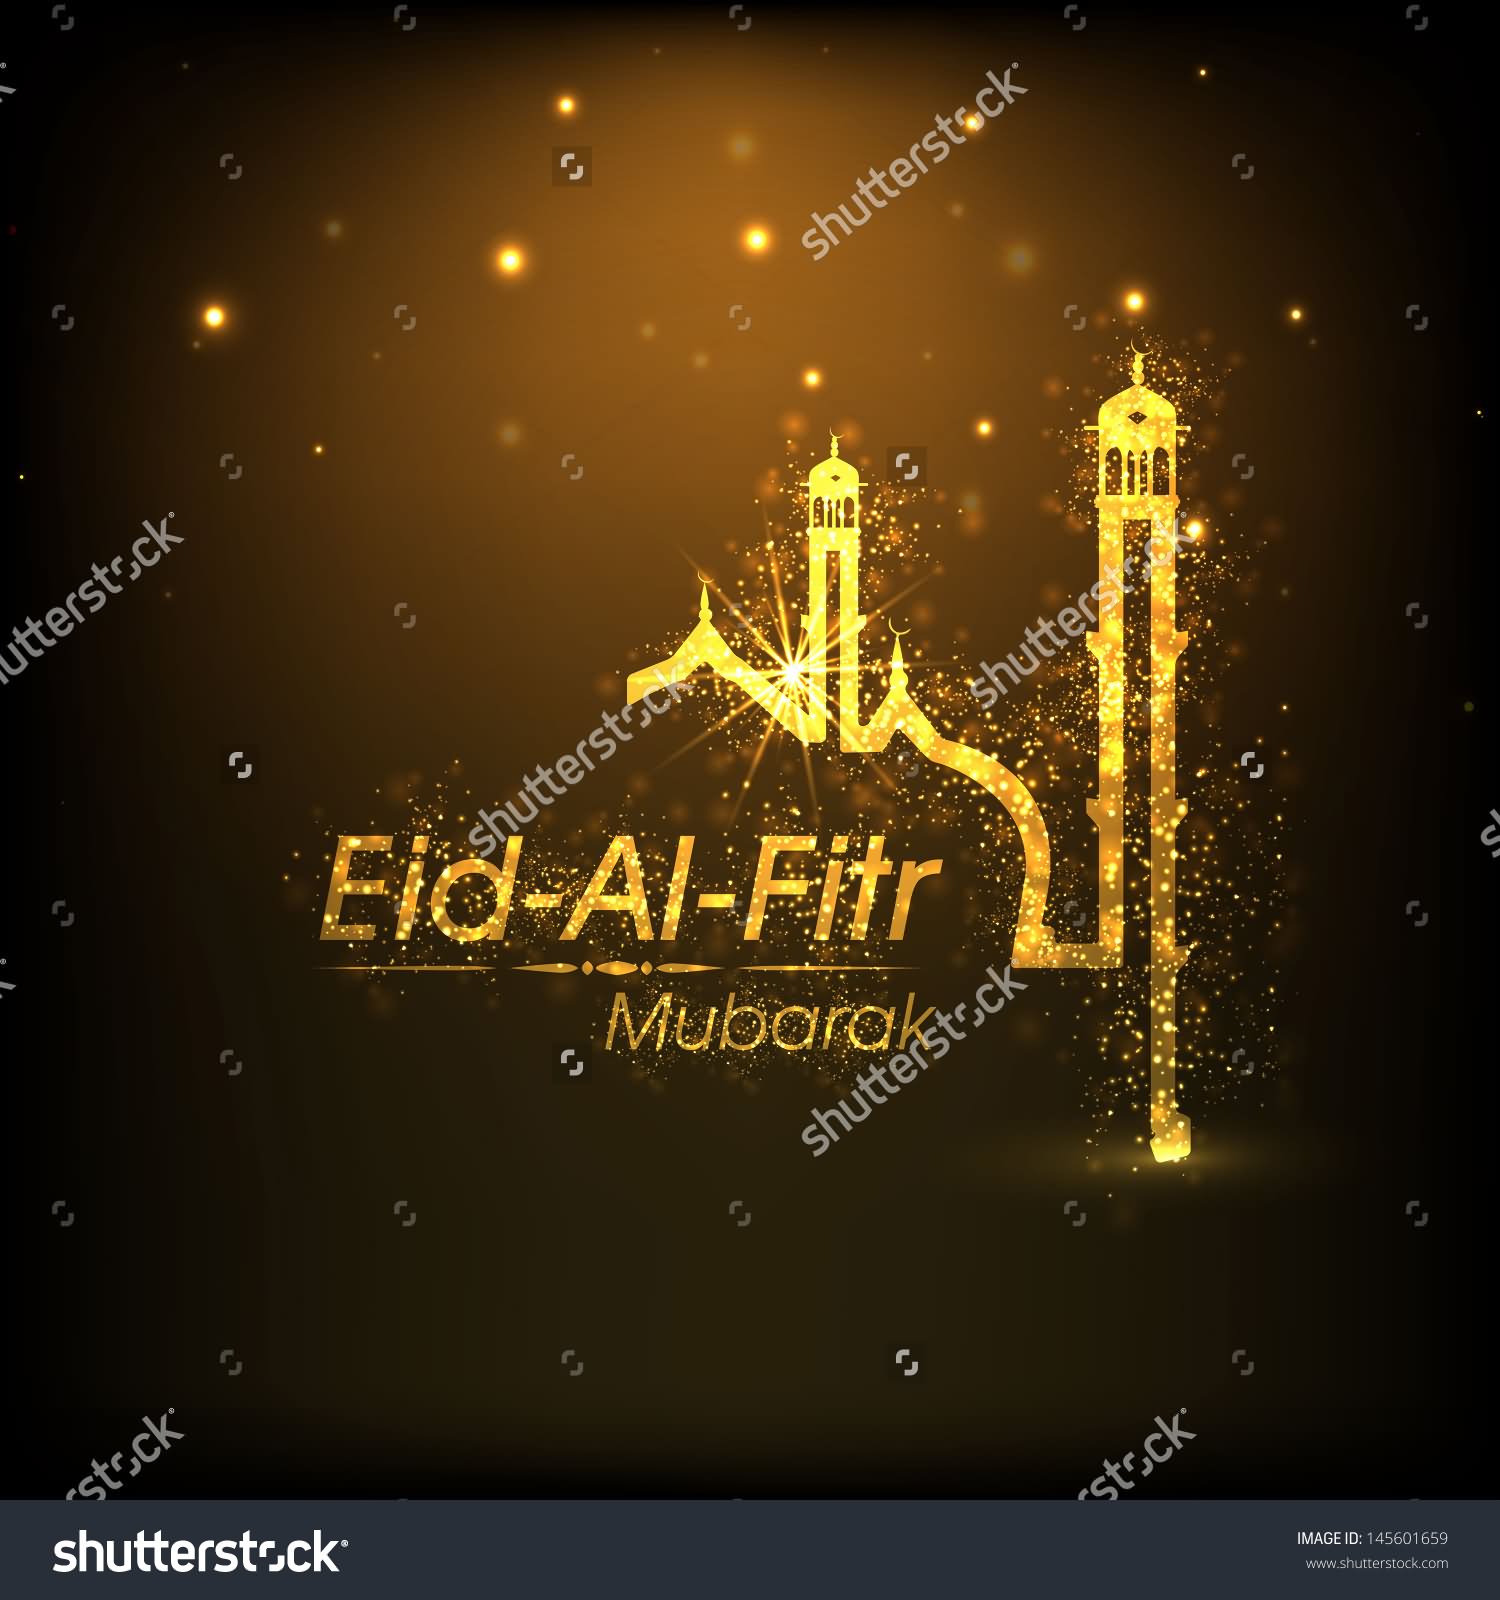 Eid Ul-Fitr Mubarak 2016 Greetings Picture